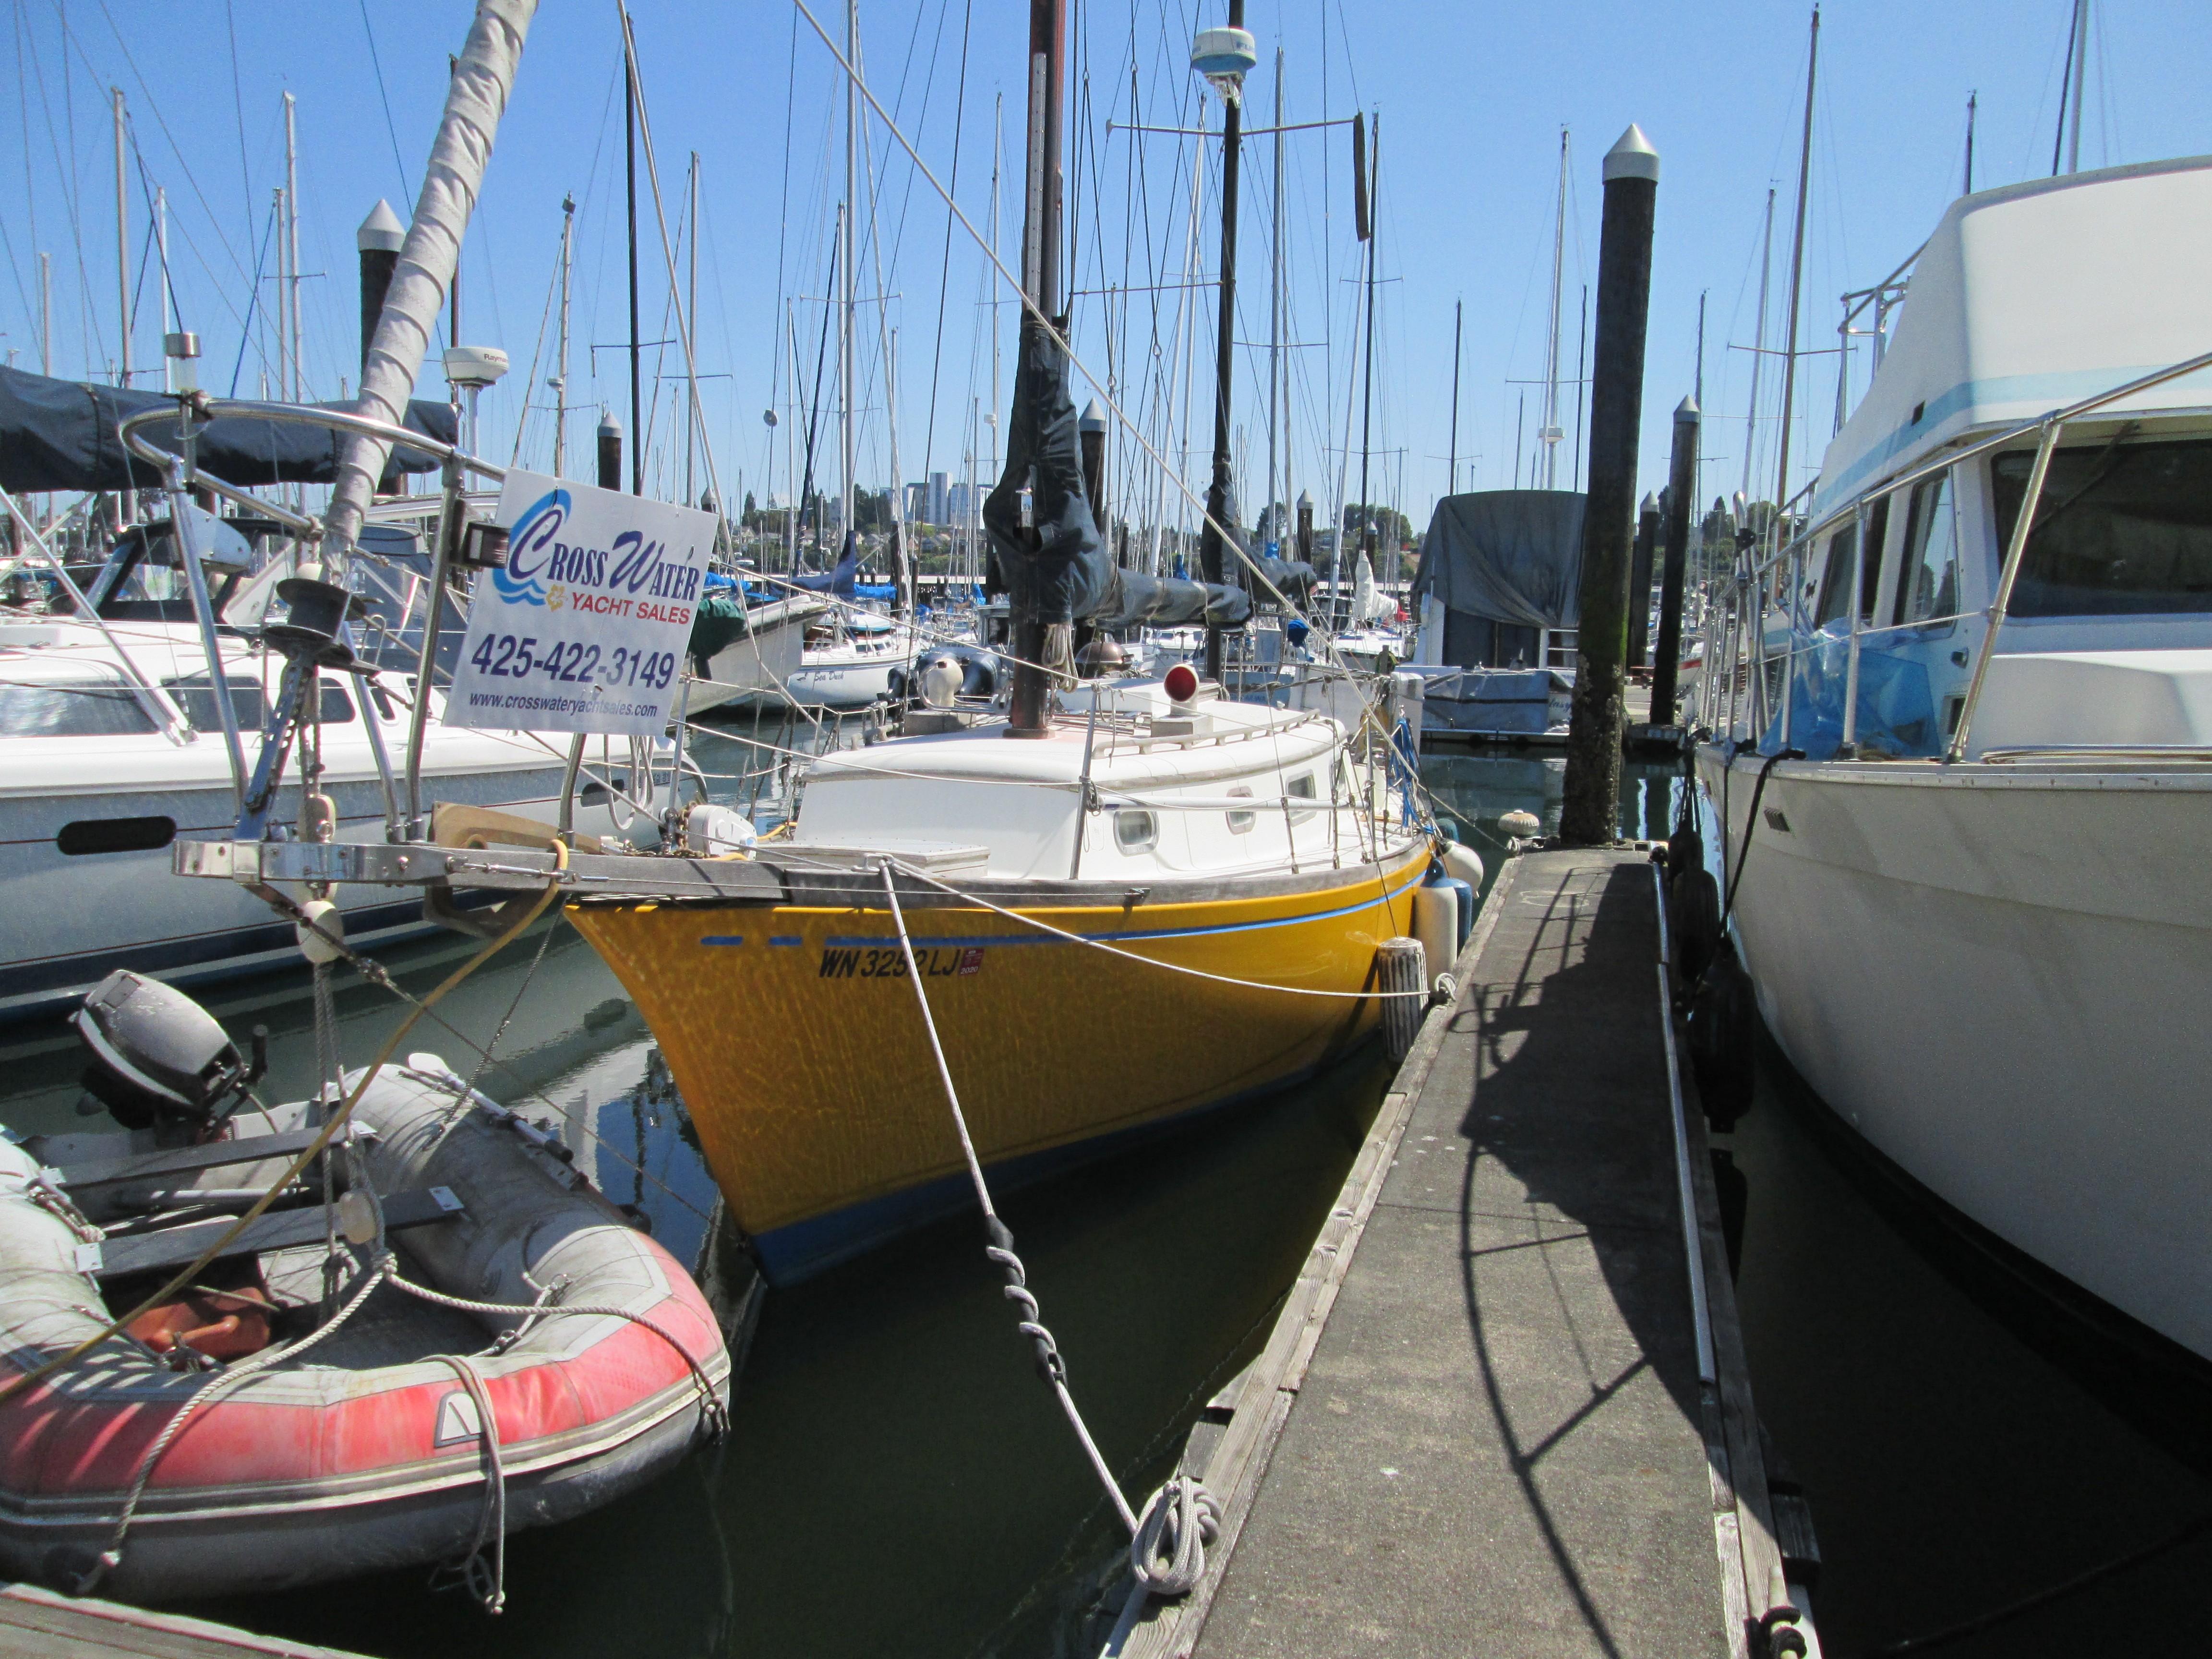 fuji 32 sailboat for sale